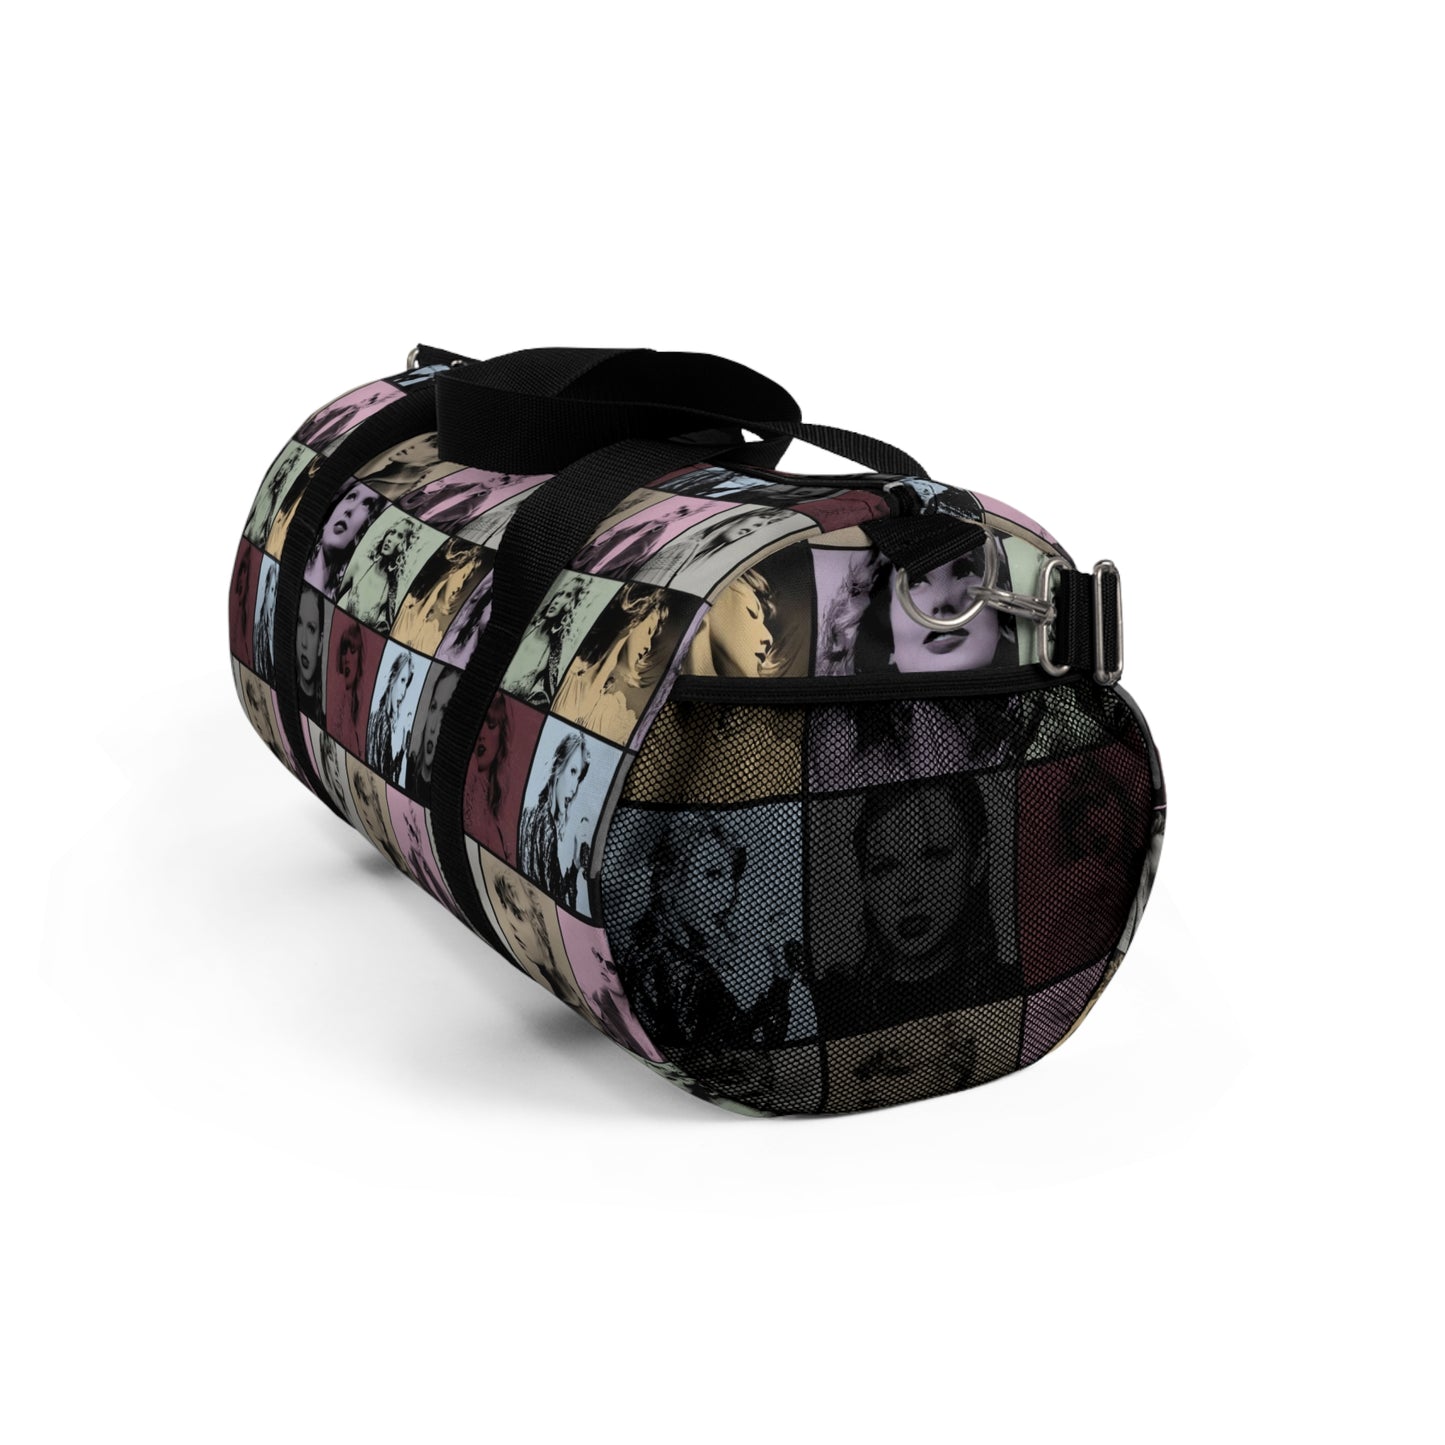 Taylor Swift Eras Collage Duffel Bag